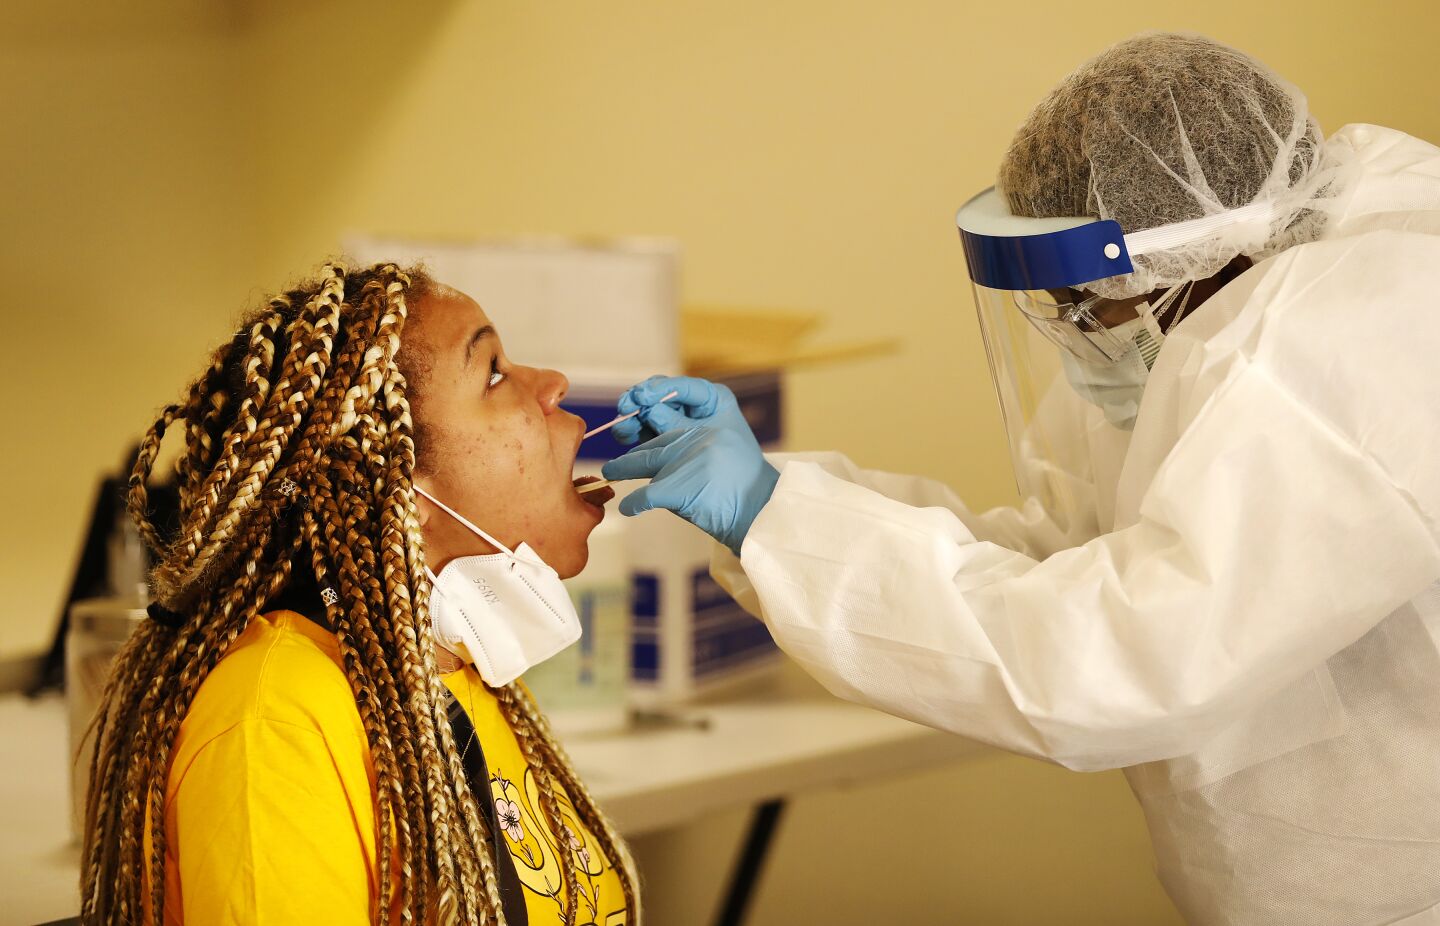 Coronavirus: Phase 2 of reopening in Southern California